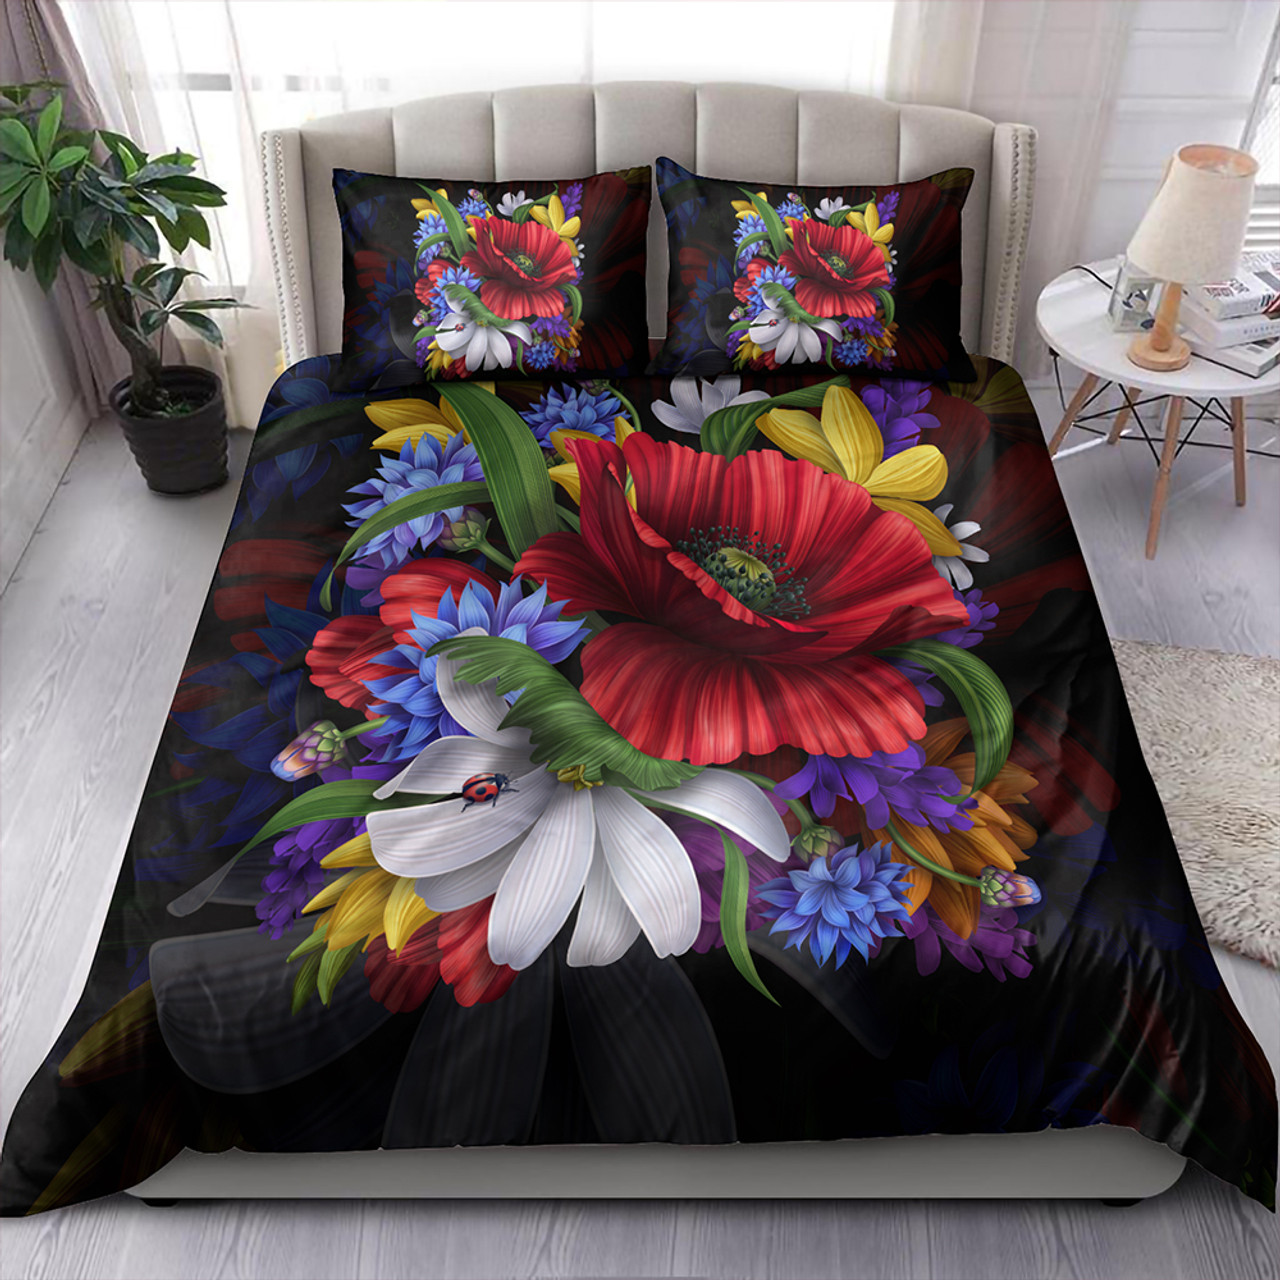 Hawaii Bedding Set Hibiscus Flower Beautiful